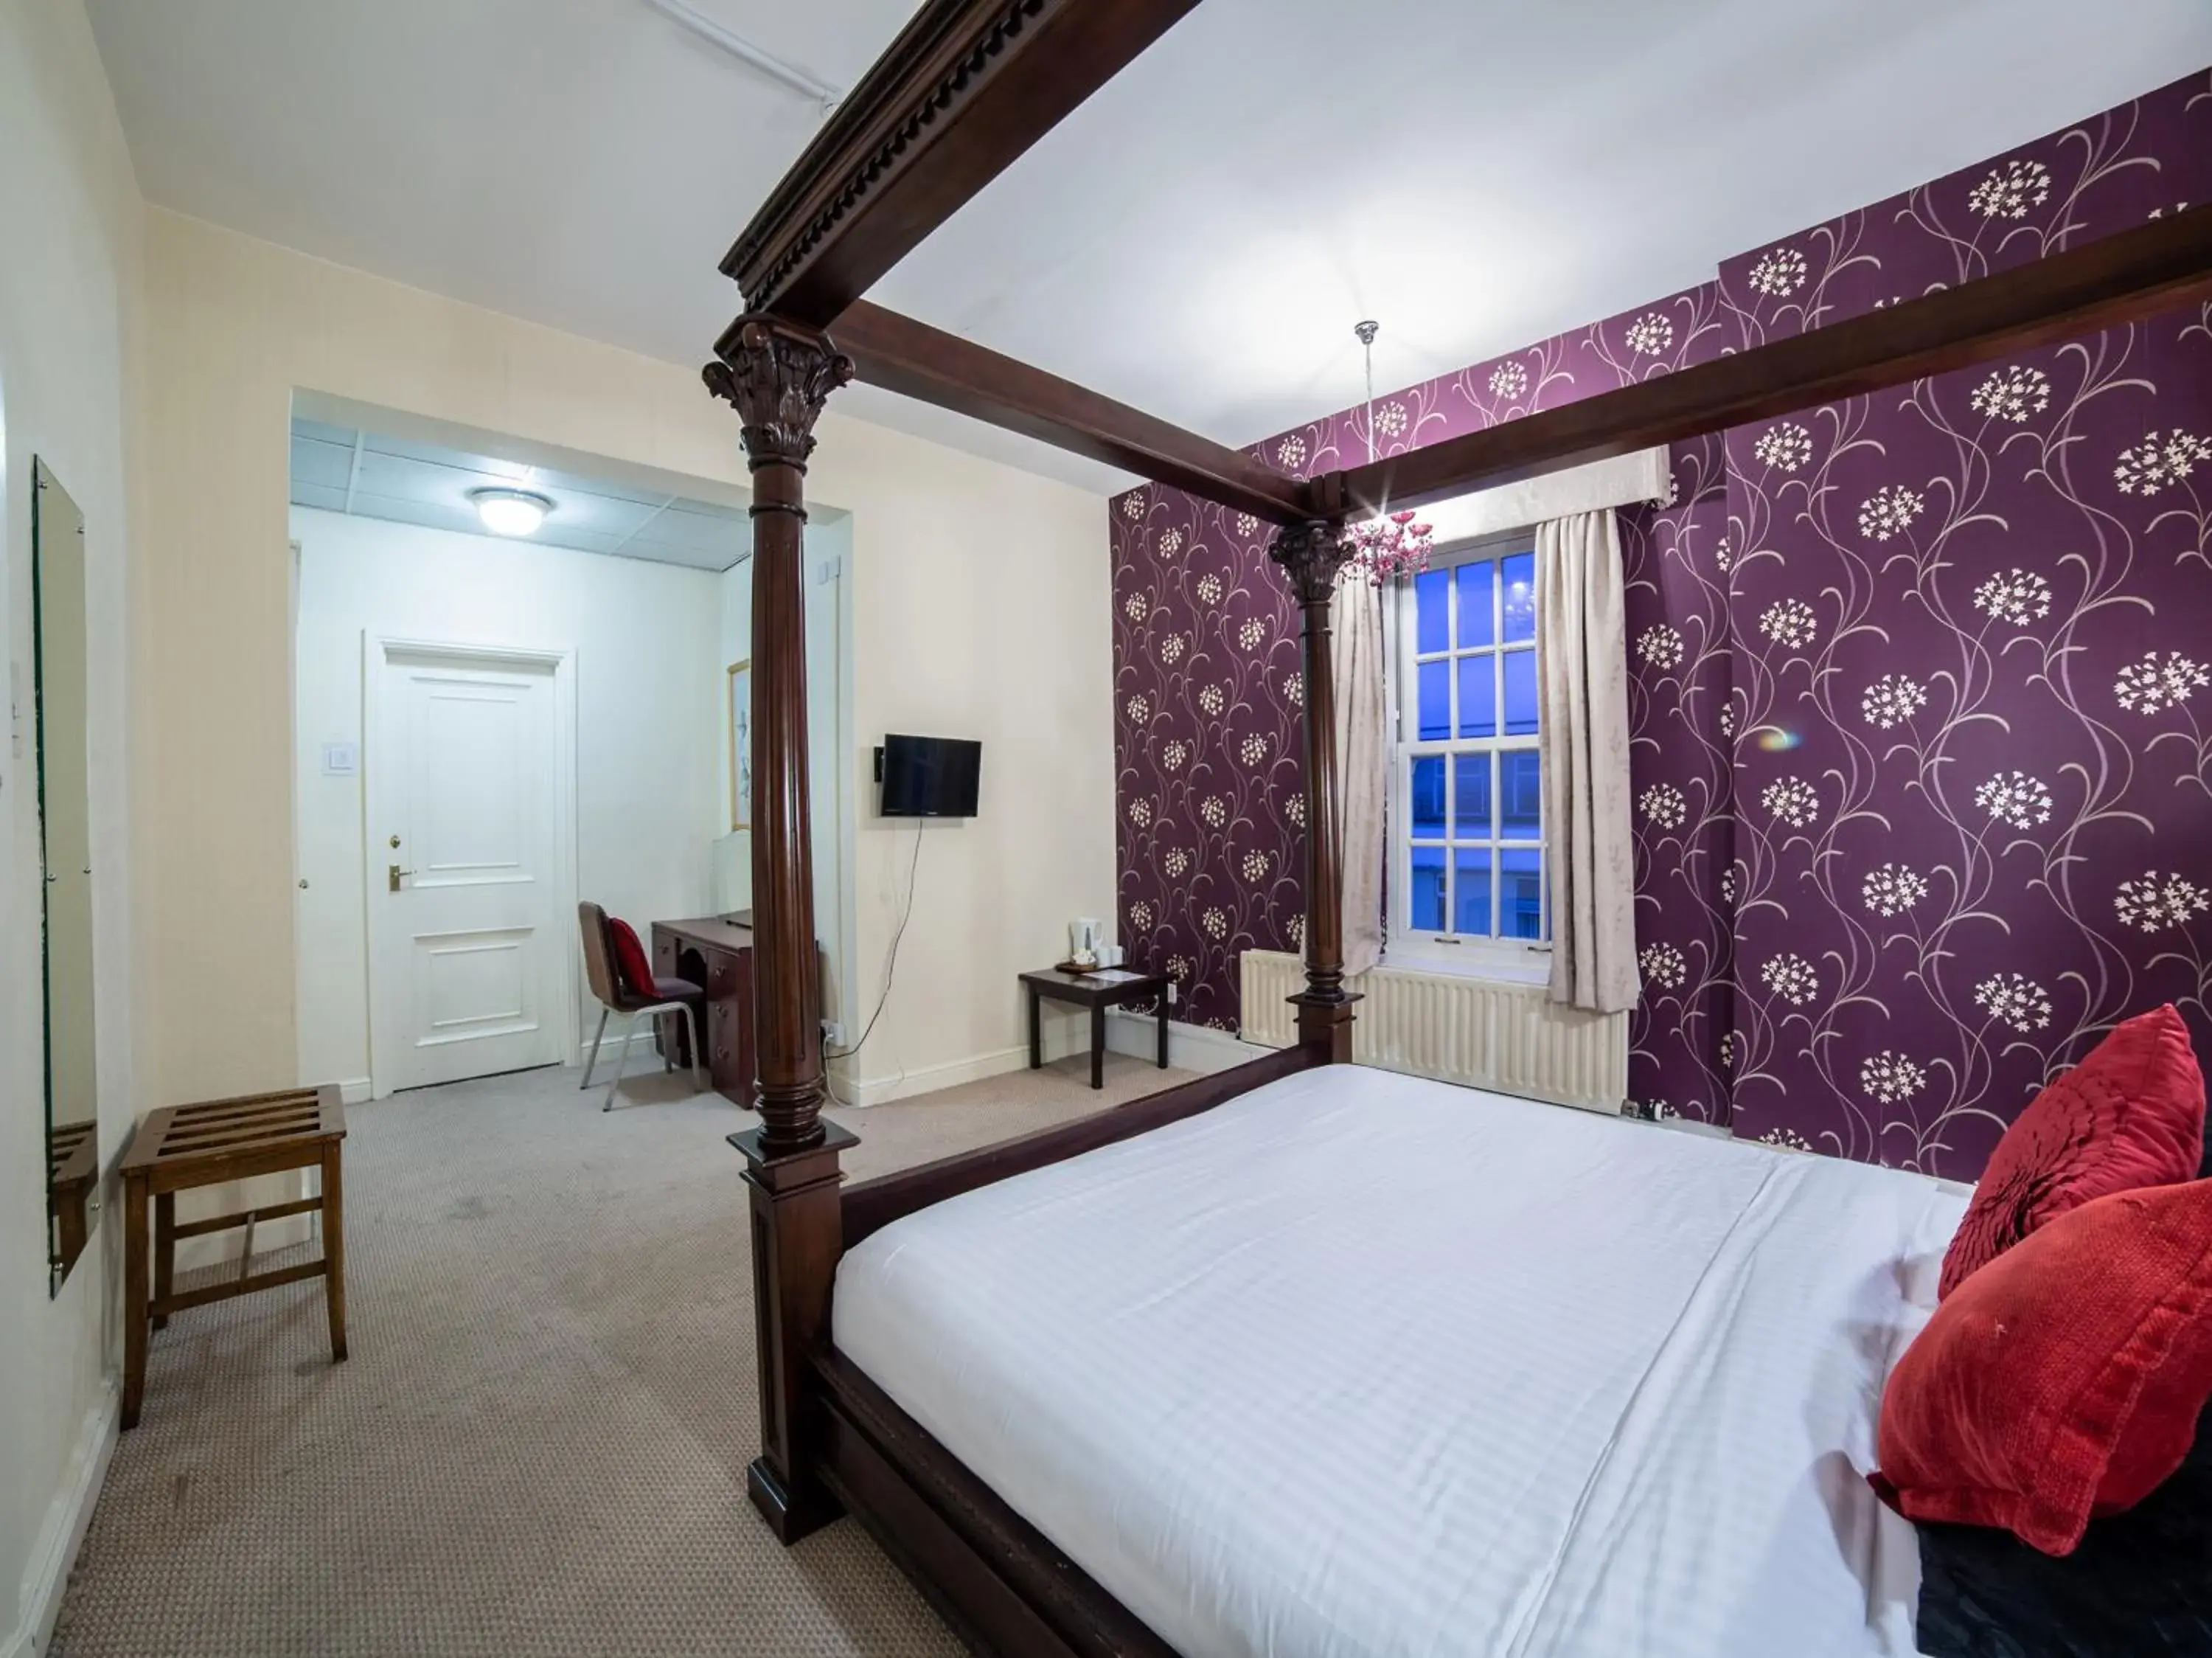 Bedroom, Bed in George Hotel, Burslem, Stoke-on-Trent